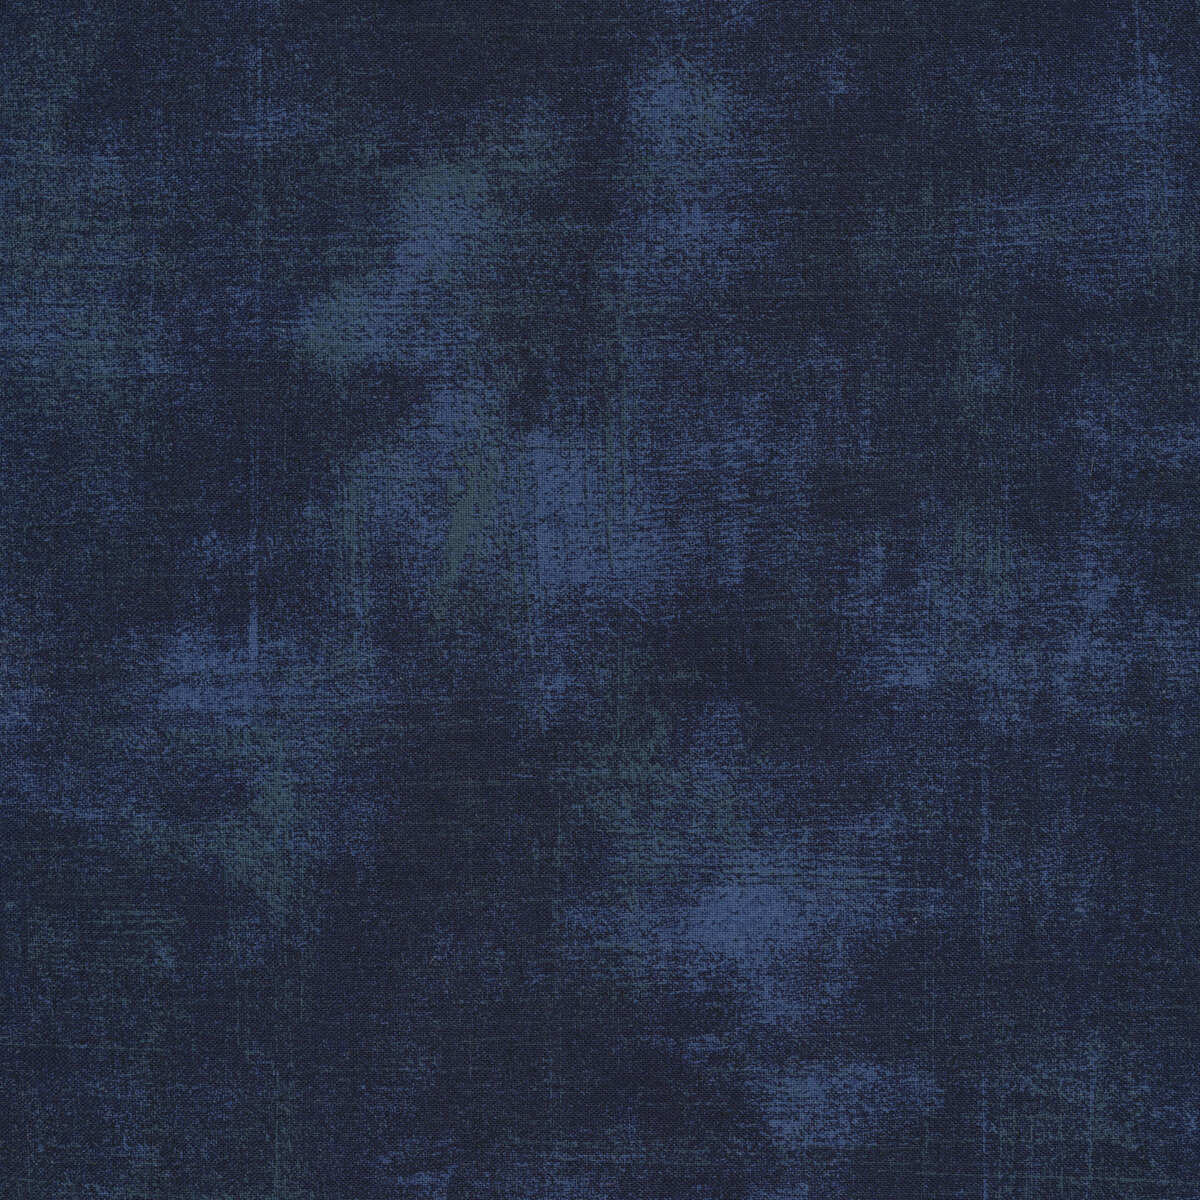 Grunge Basics 30150 385 Blue Steel By Basicgrey For Moda Fabrics